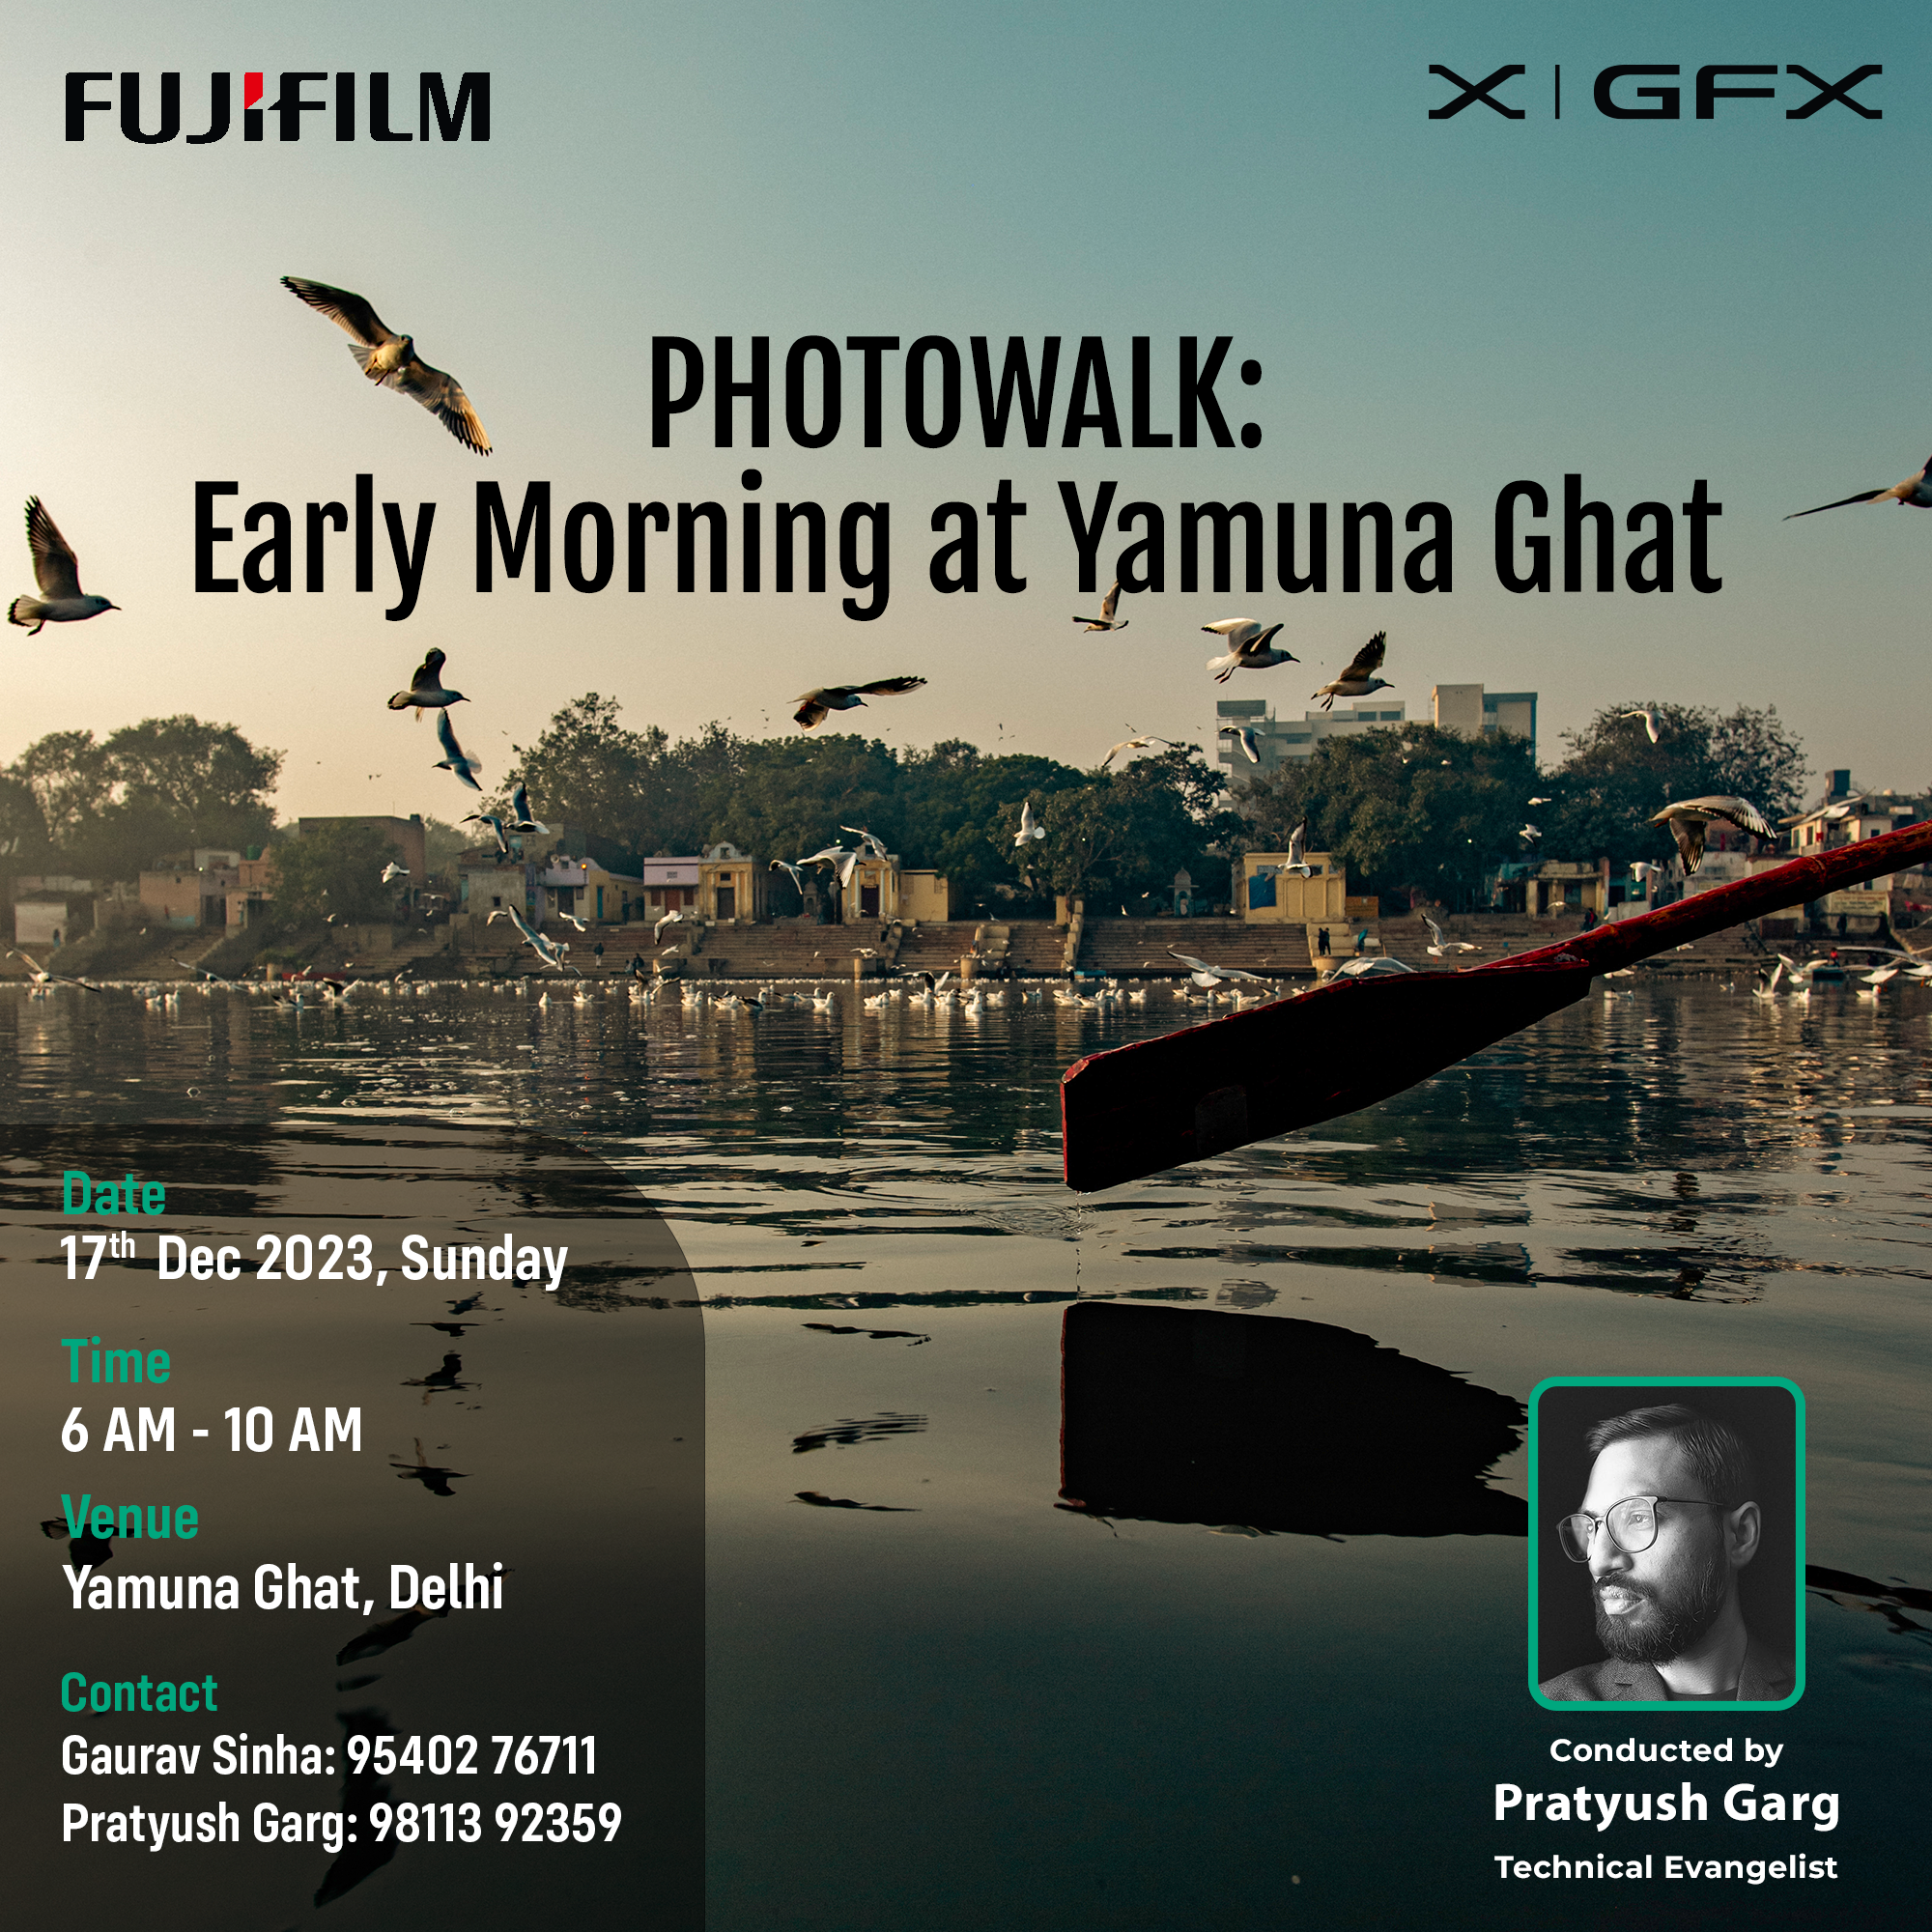 Photowalk: Early Morning at Yamuna Ghat